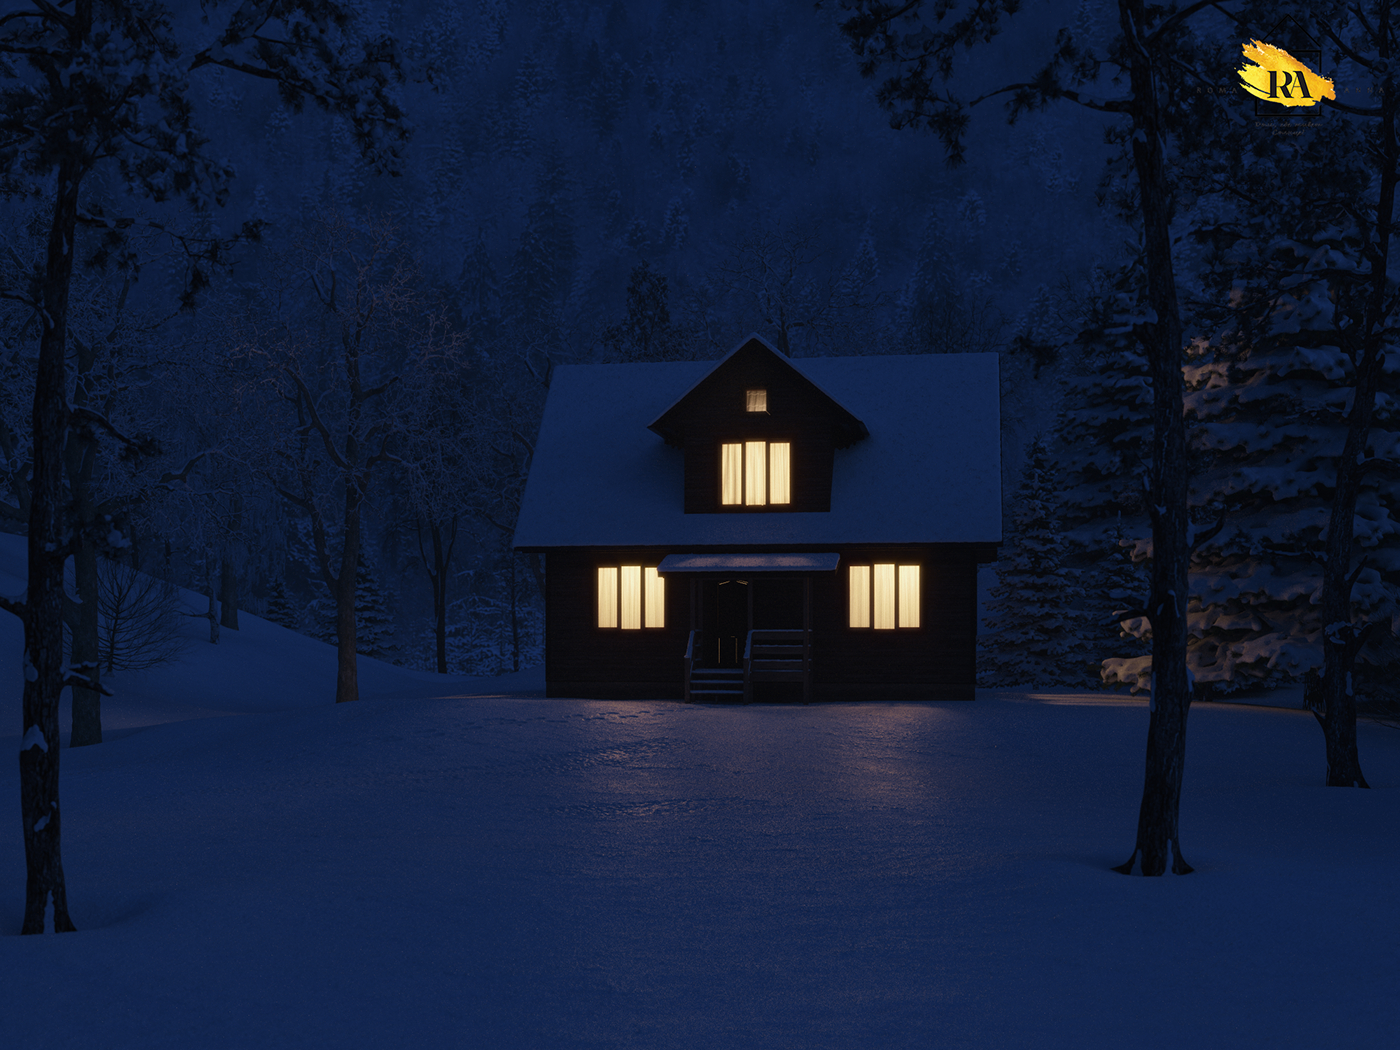 Casa na floresta de inverno em 3d max corona render imagem